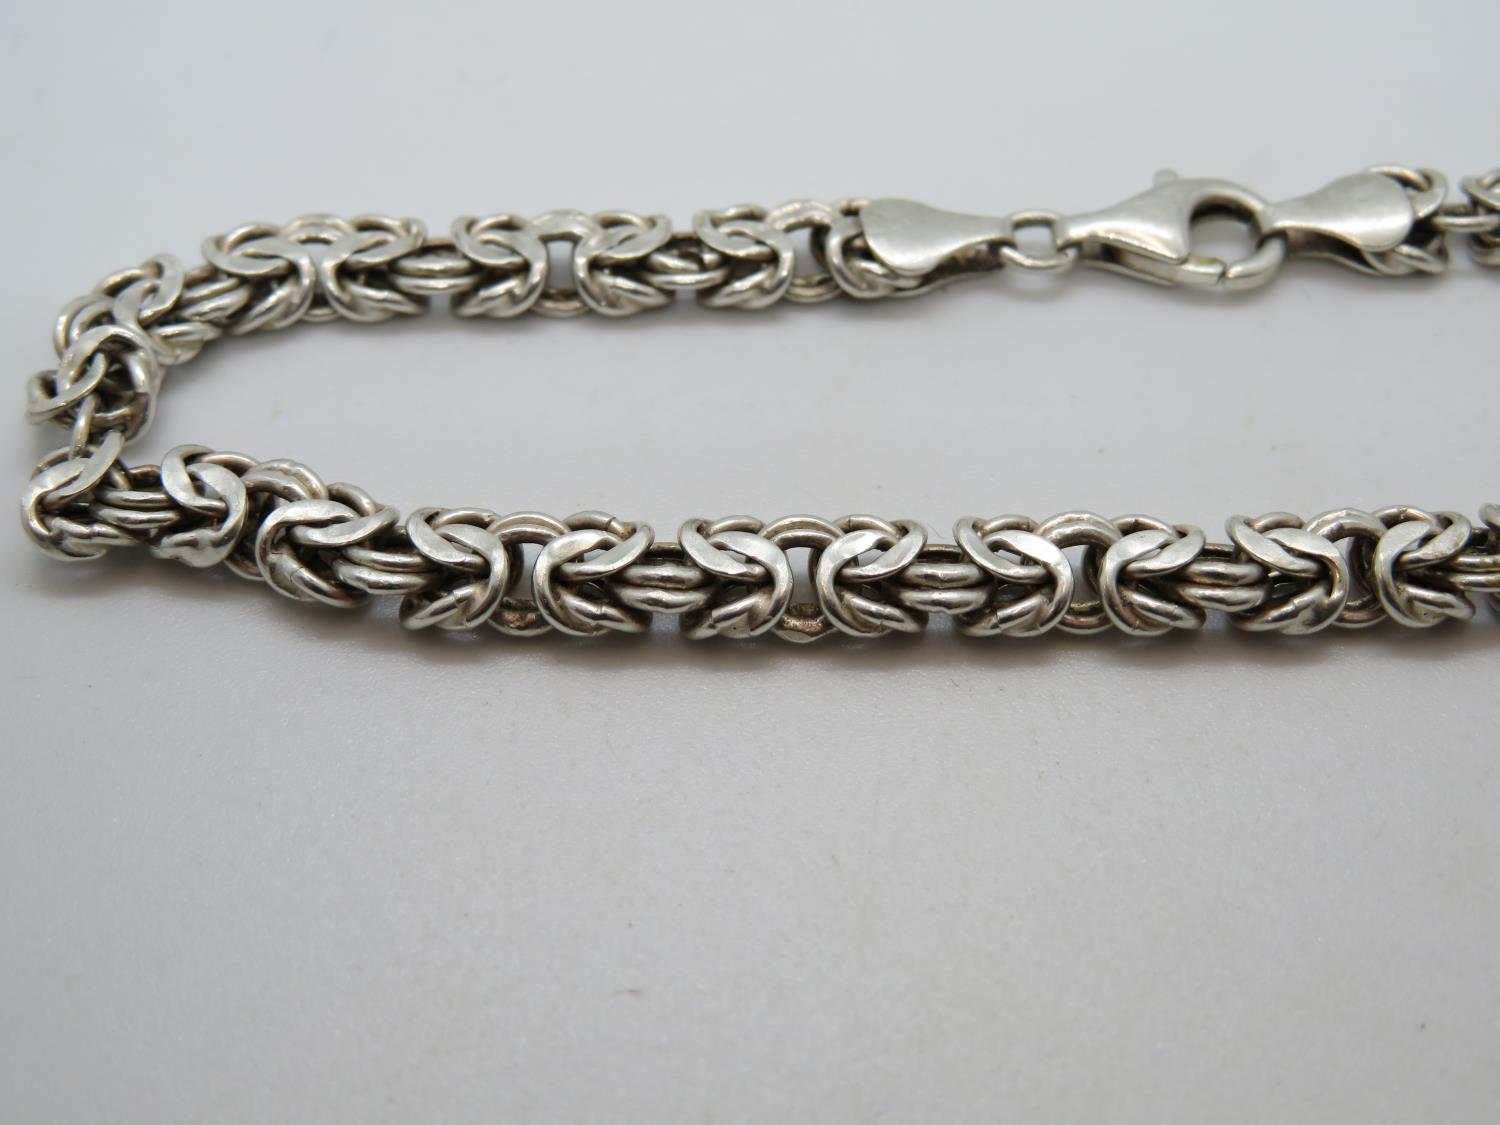 8.5g silver bracelet - Image 2 of 3